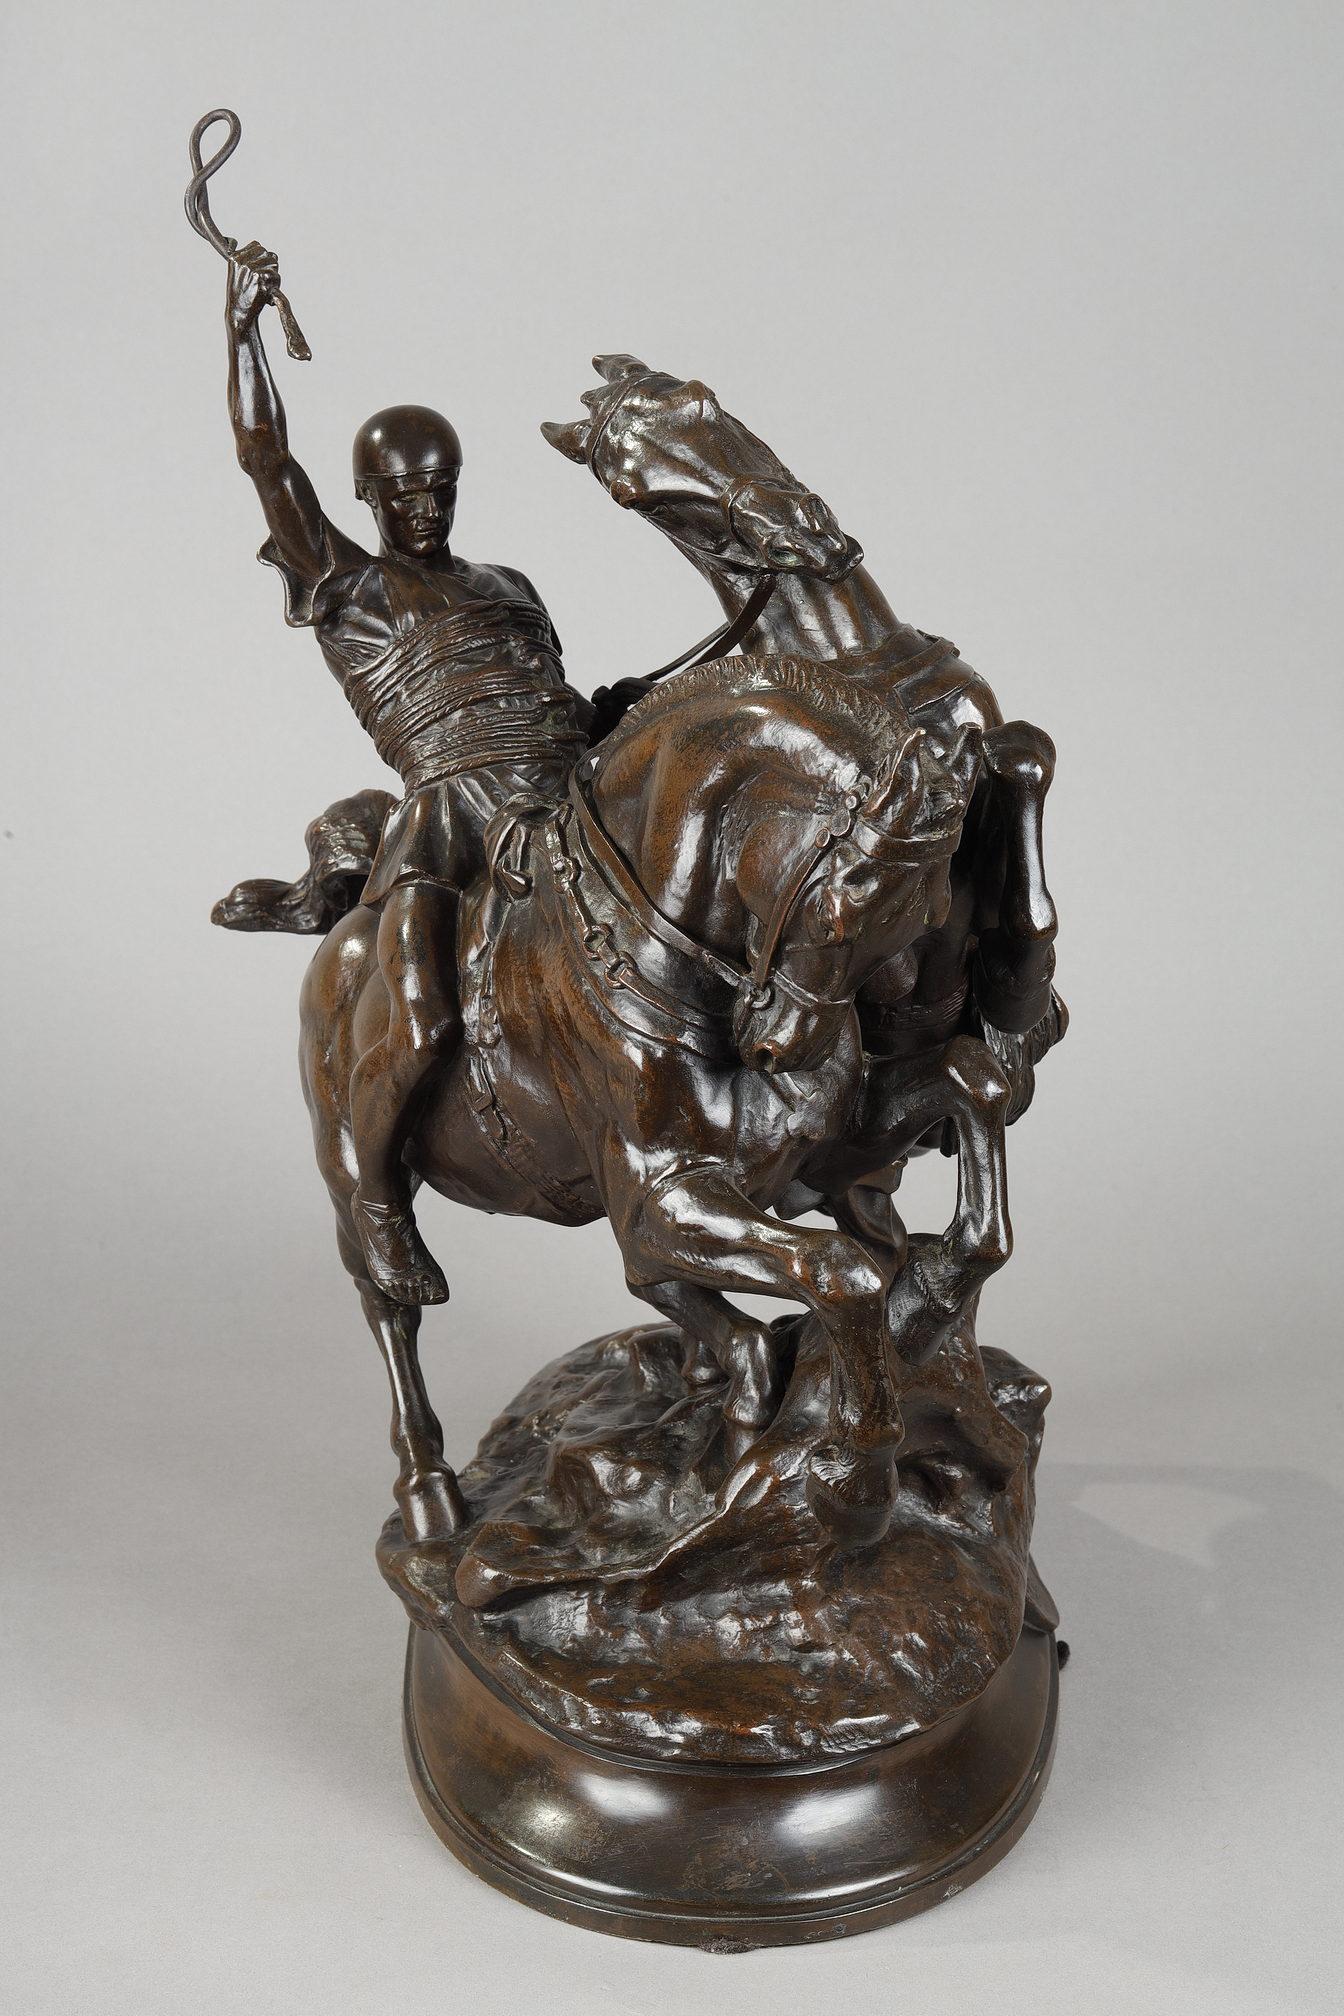 Equestrian sculpture
